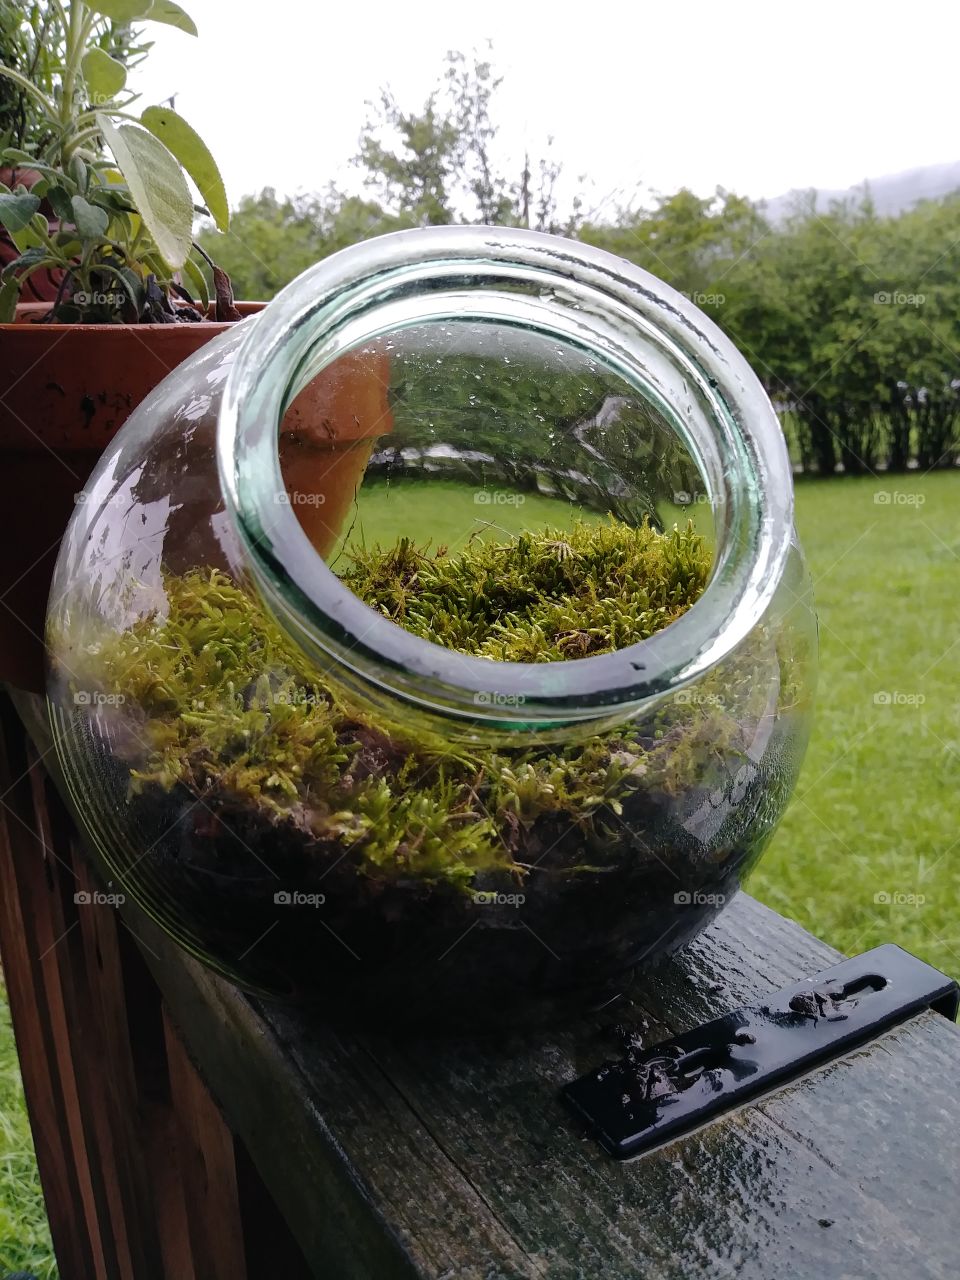 My favorite moss terrarium soaking up the sun and rain.